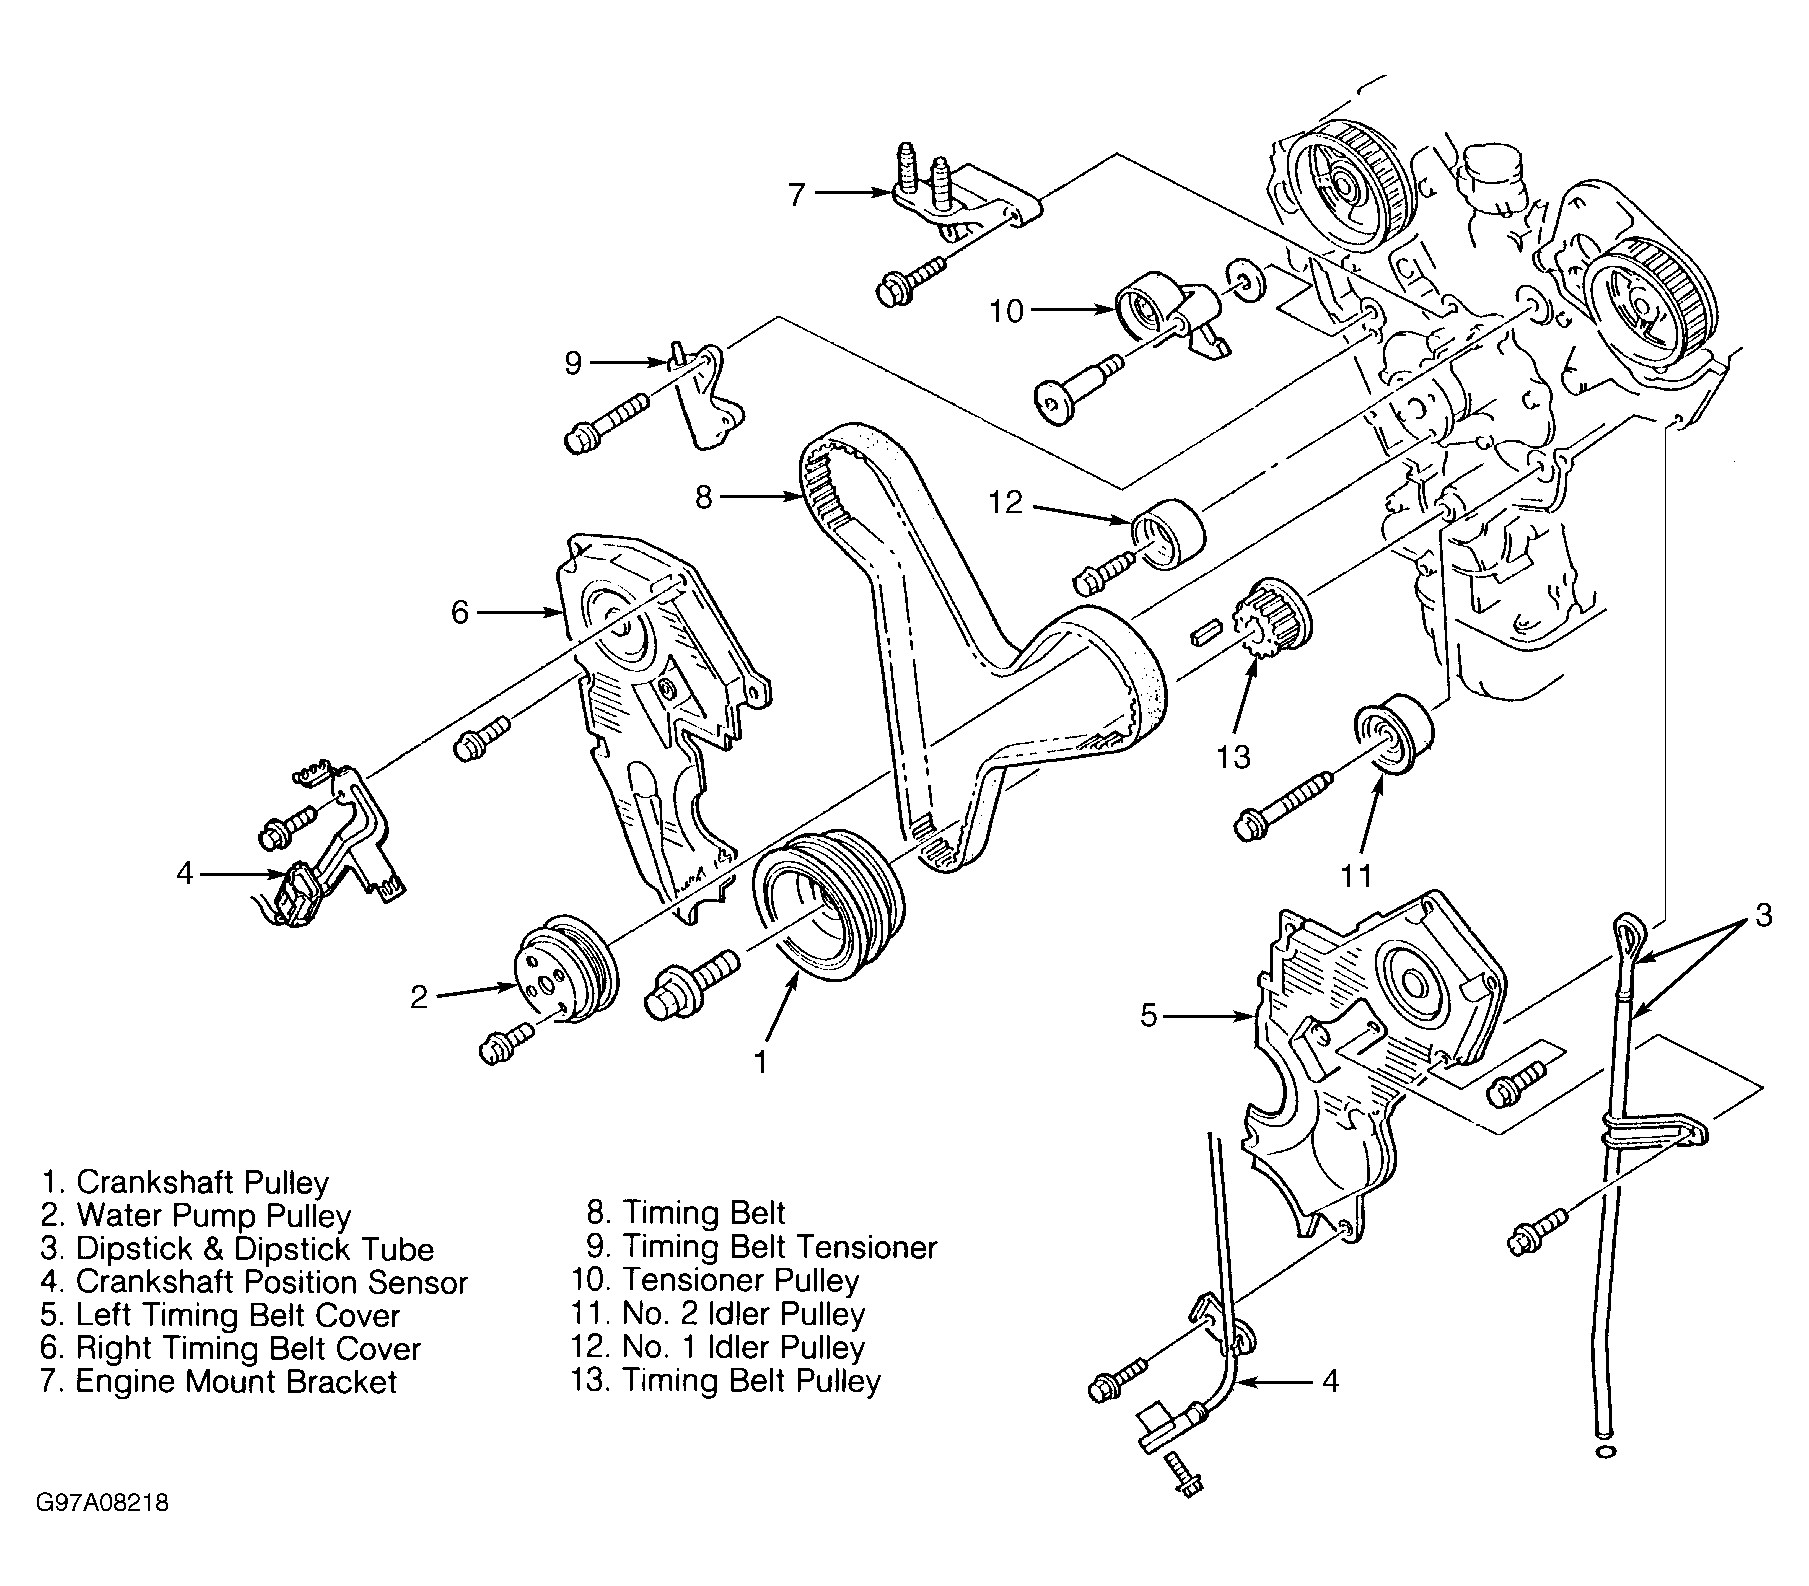 2001 Mazda Millenia Engine Diagram 2002 Mazda Millenia Serpentine Belt Routing and Timing Belt Diagrams Of 2001 Mazda Millenia Engine Diagram